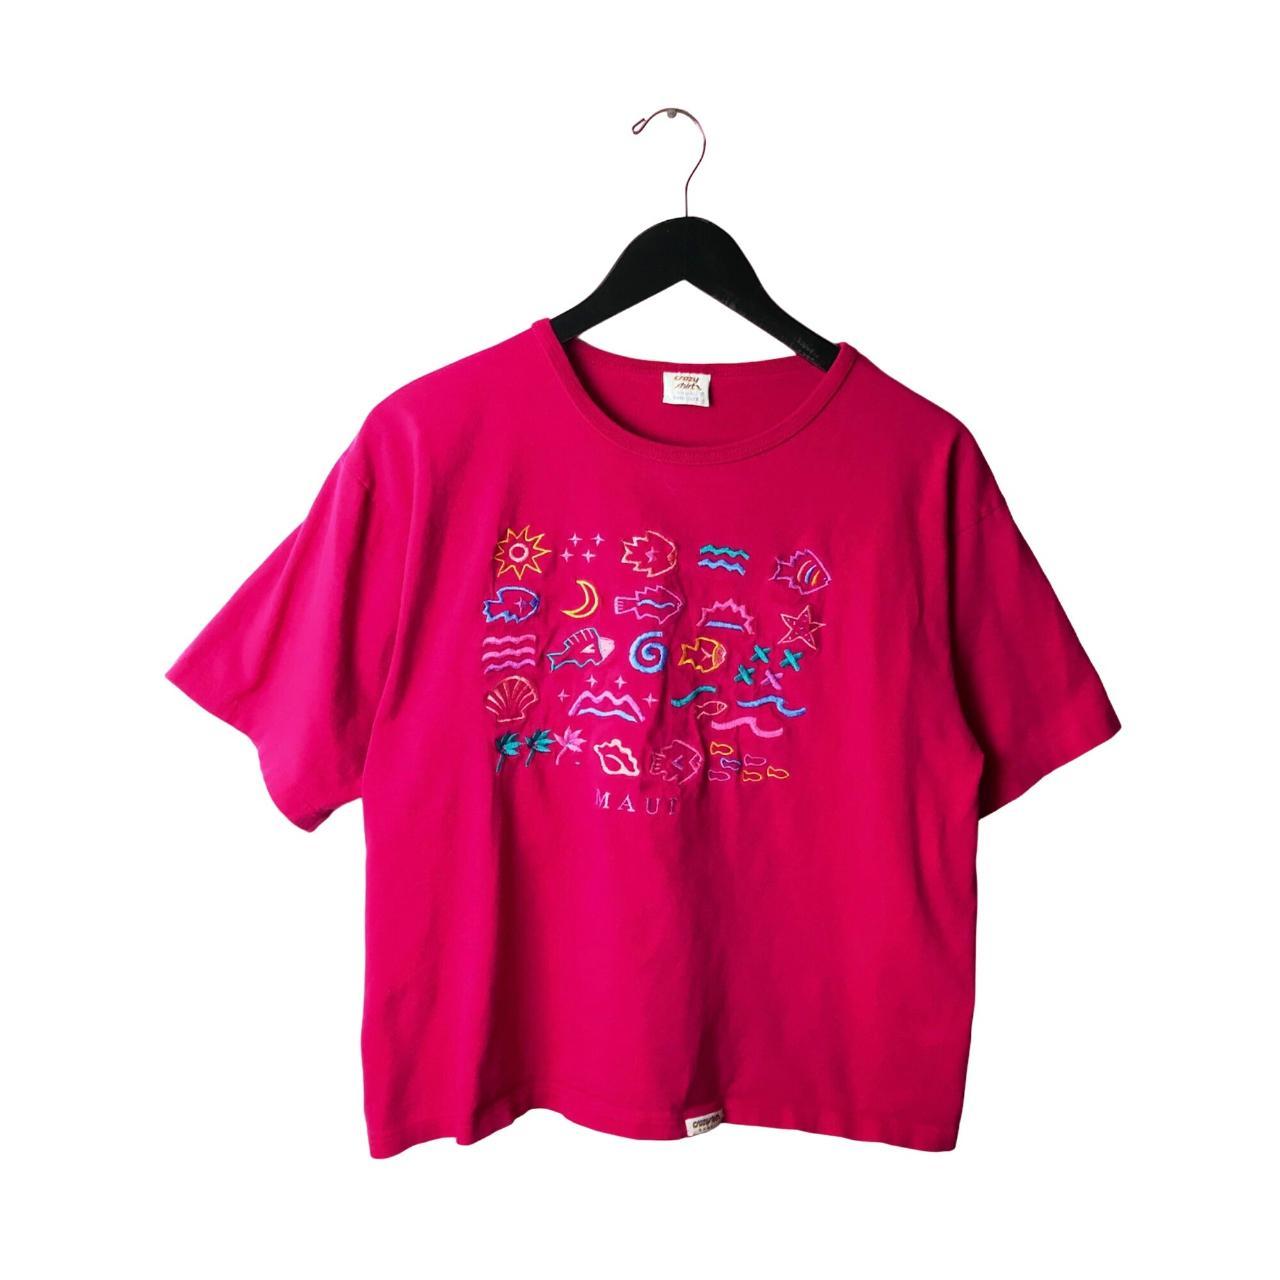 Vintage 90s Crazy Shirts Maui T Shirt Womens Pink... - Depop